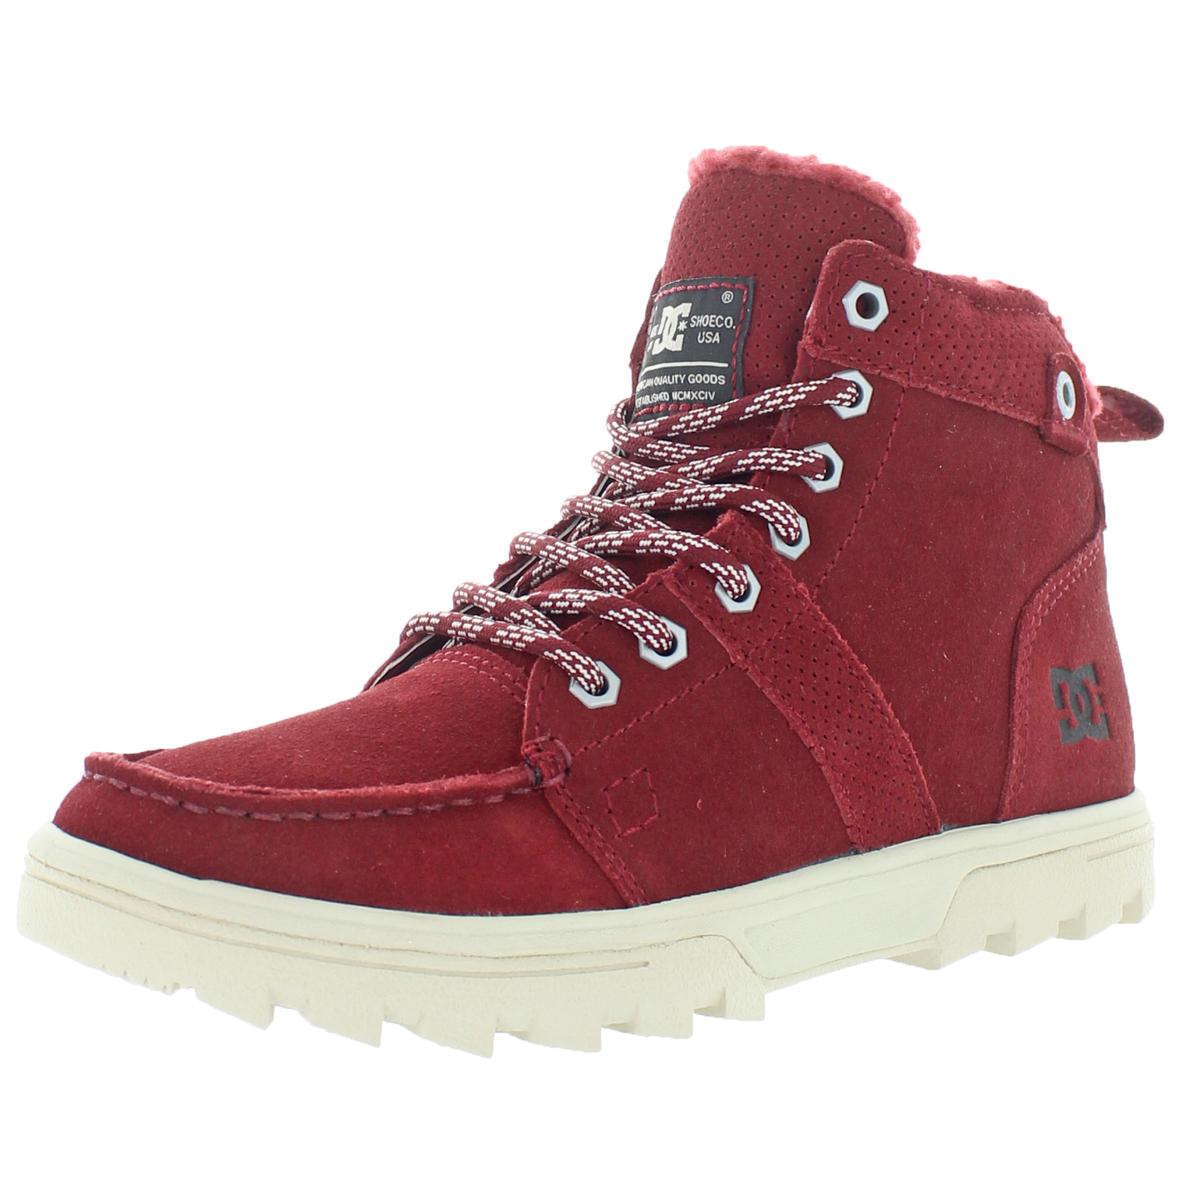 DC Mens Woodland Red Suede Faux Fur Snow Boots Shoes 6.5 Medium (D ...